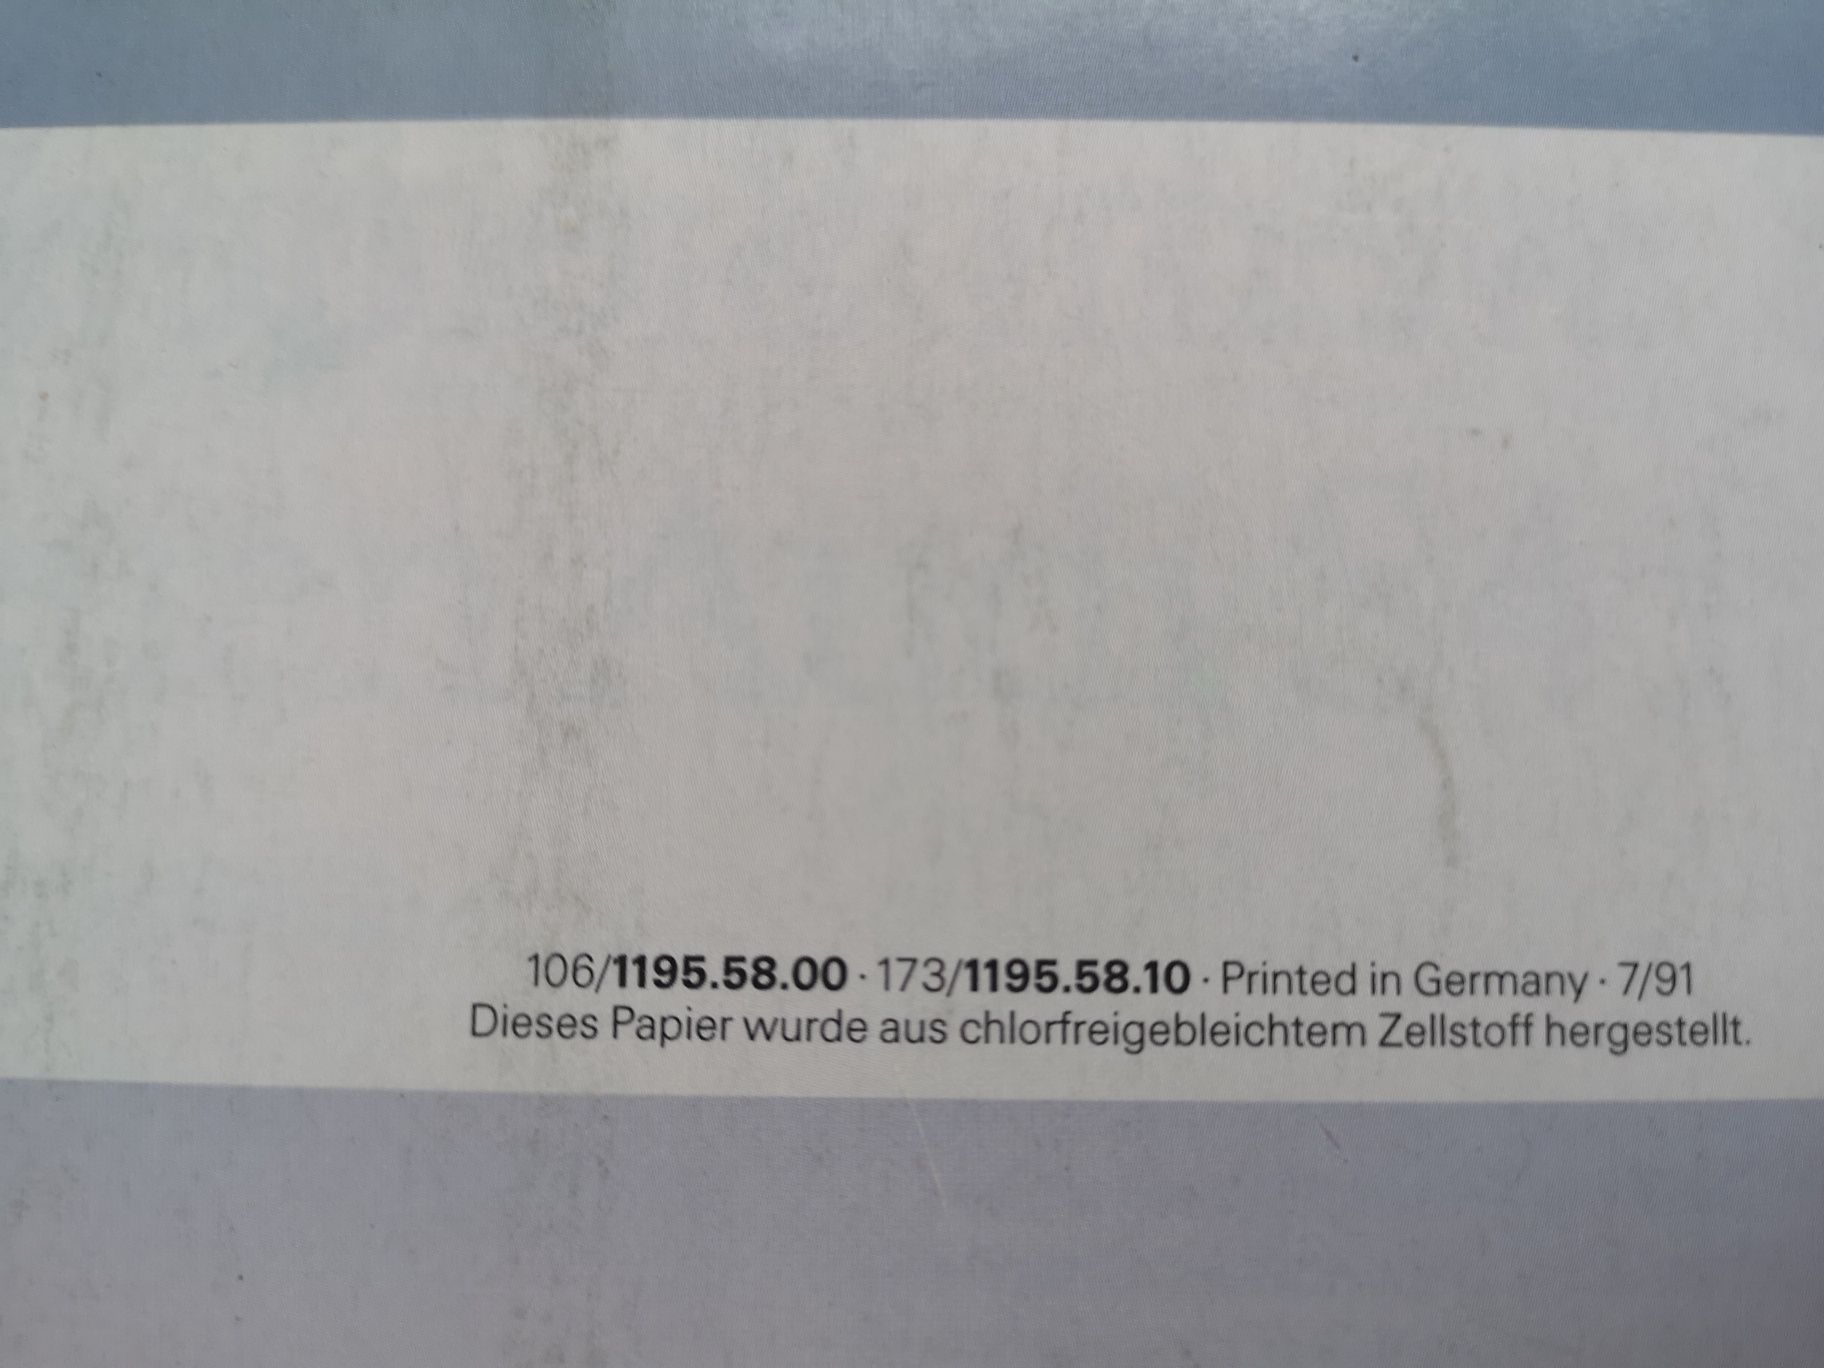 Prospekt katalog broszura Audi S4